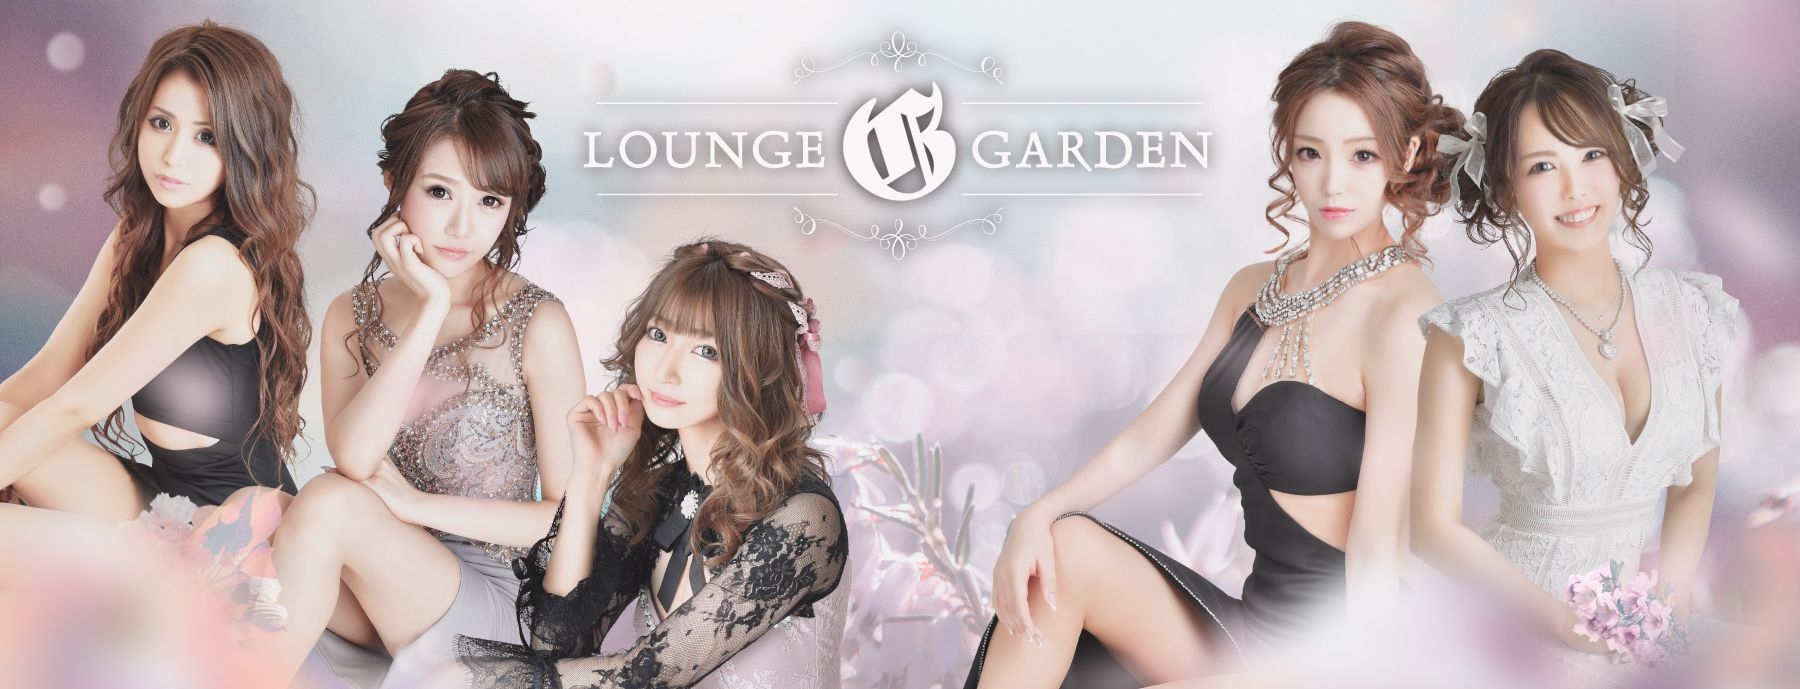 lounge Garden 〜ガーデン〜